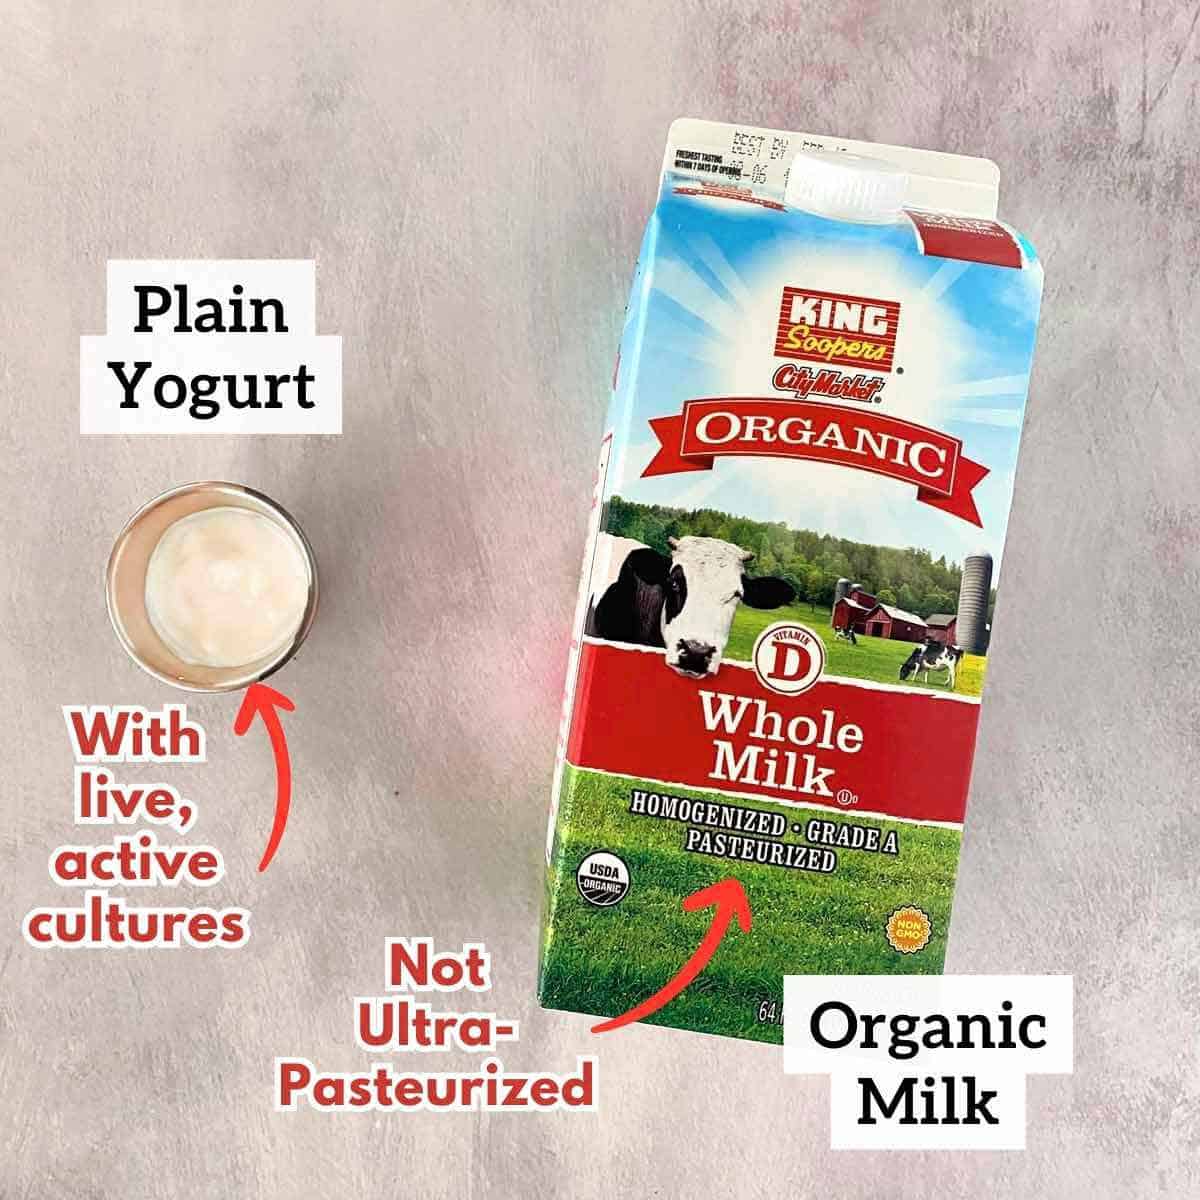 A small bowl of plain yogurt and a half gallon carton of milk.